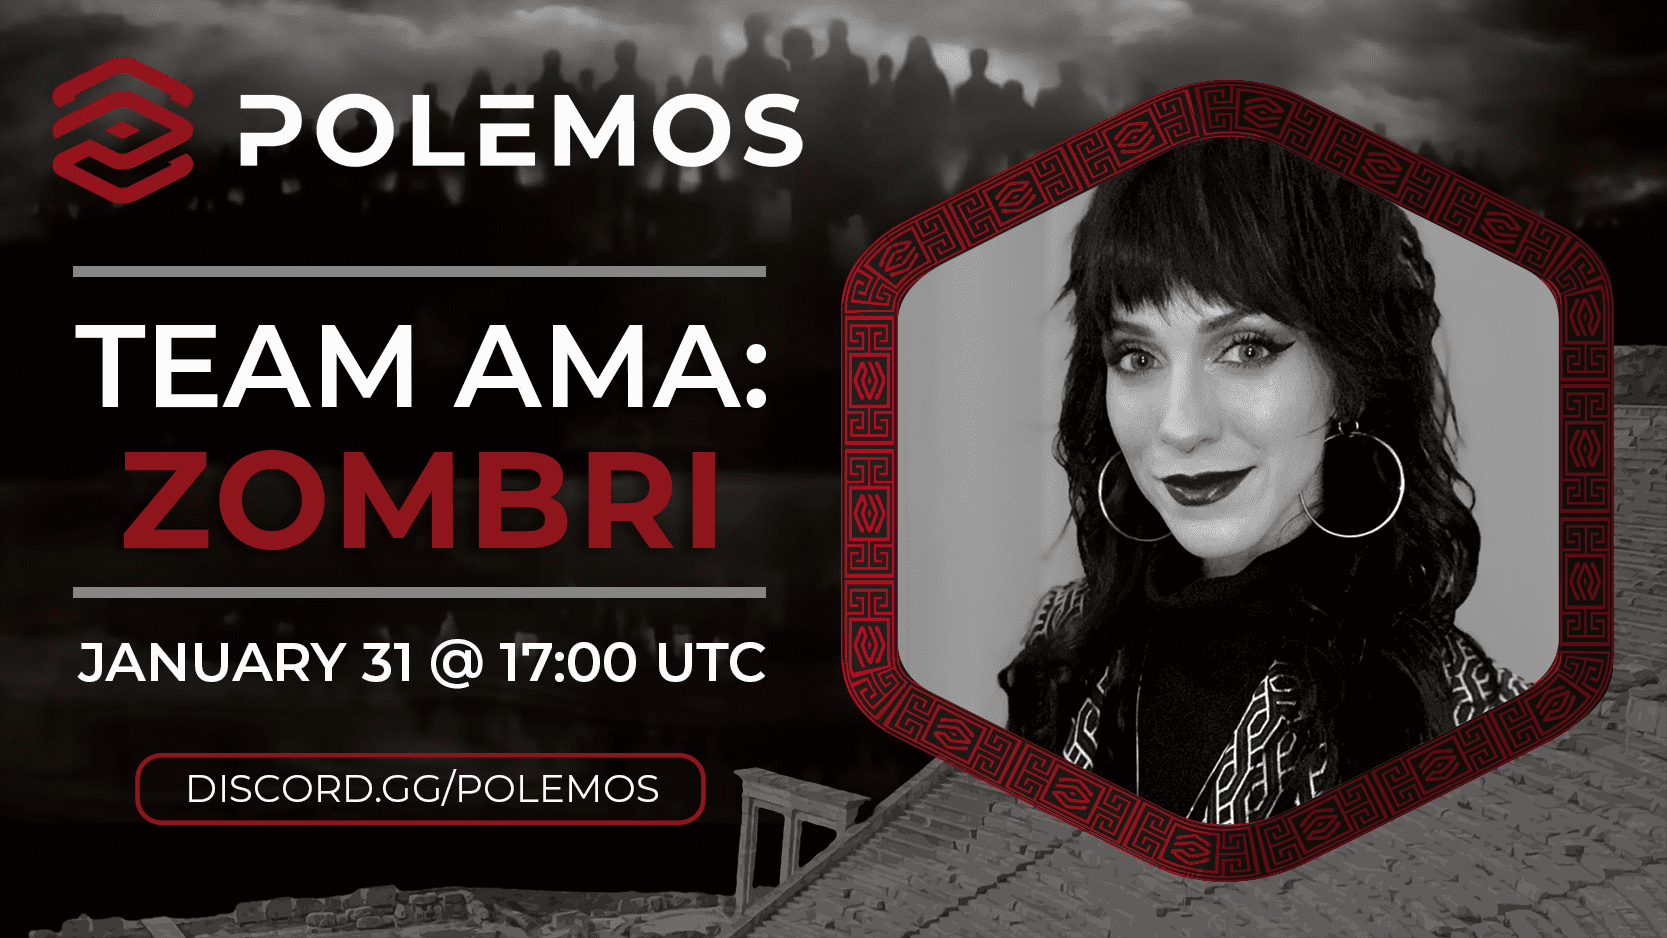 Polemos Meet The Team AMA: Zombri, Marketing Mage